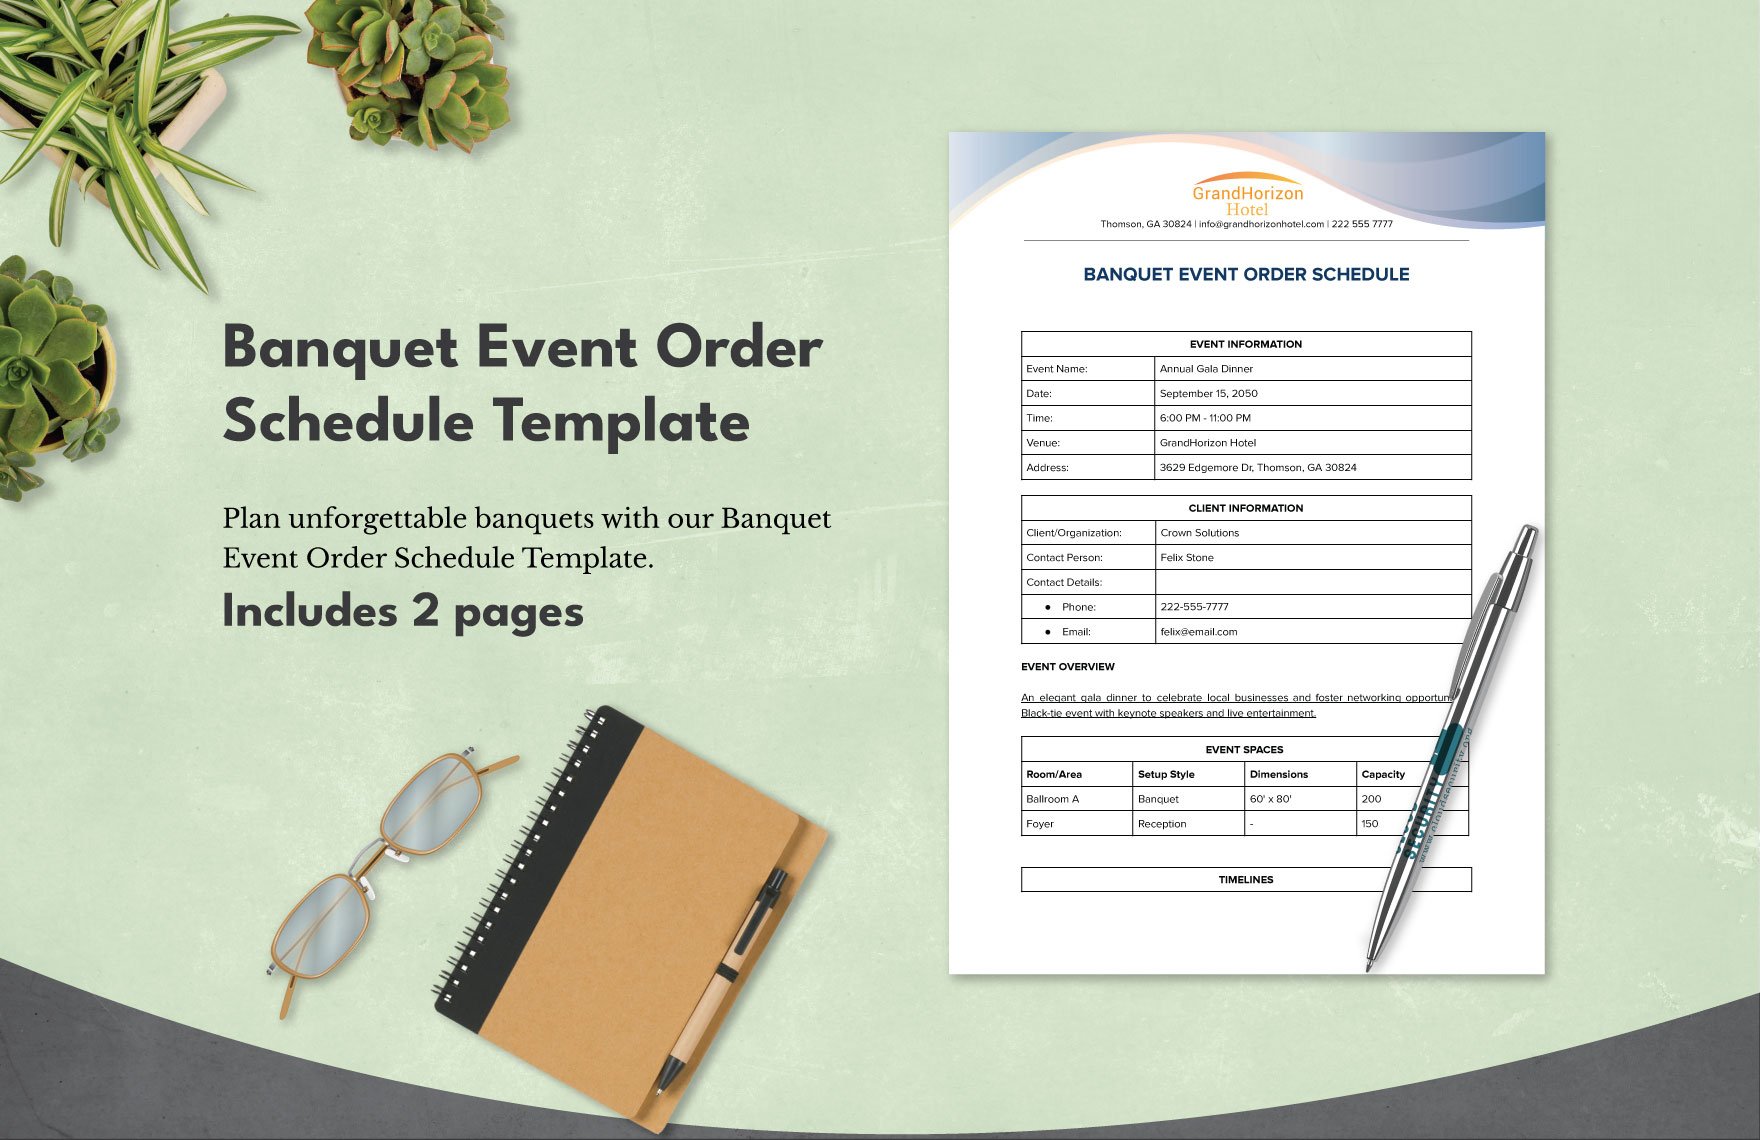 Banquet Event Order Schedule Template